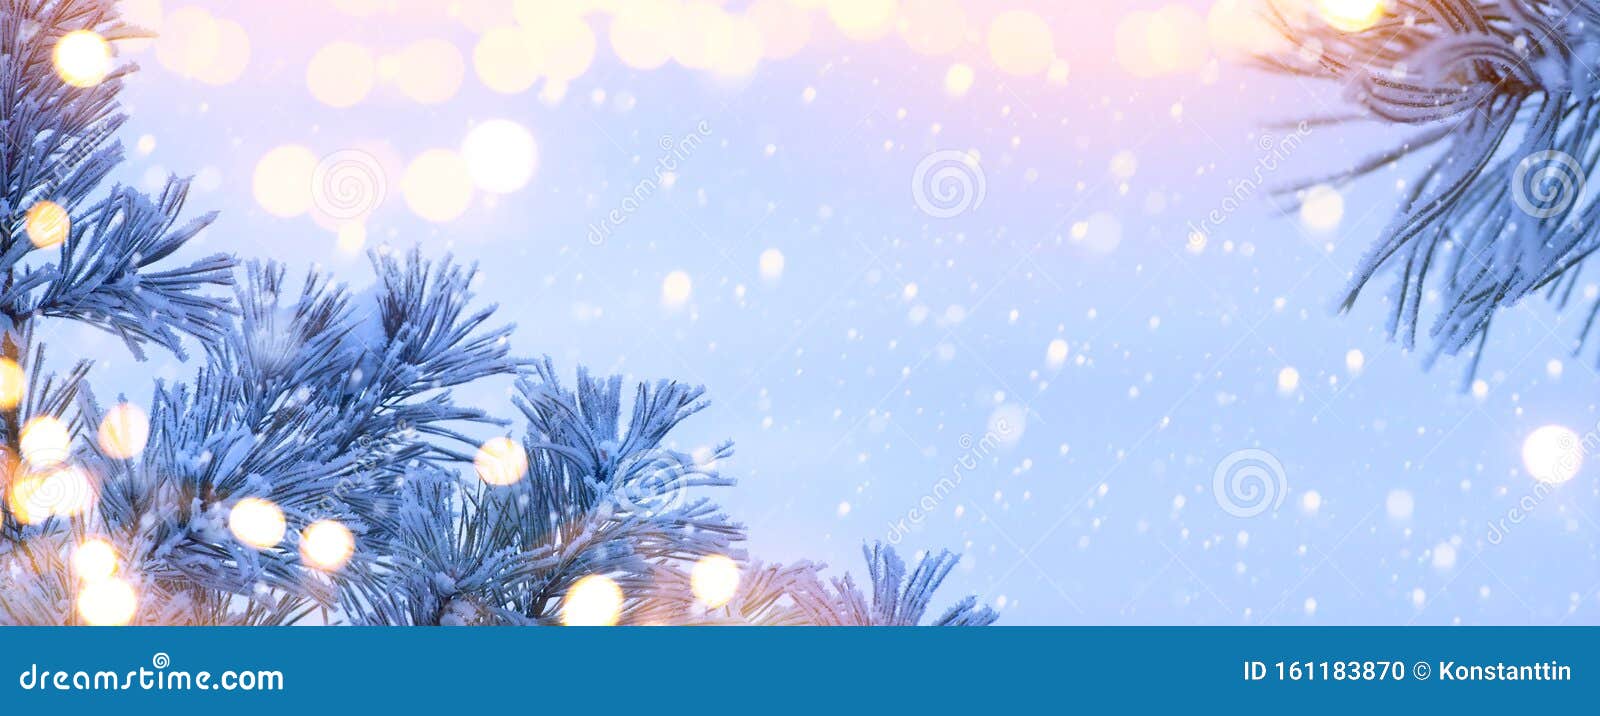 art christmas lantern. christmas and new year holidays background with christmas tree and holiday light, winter season